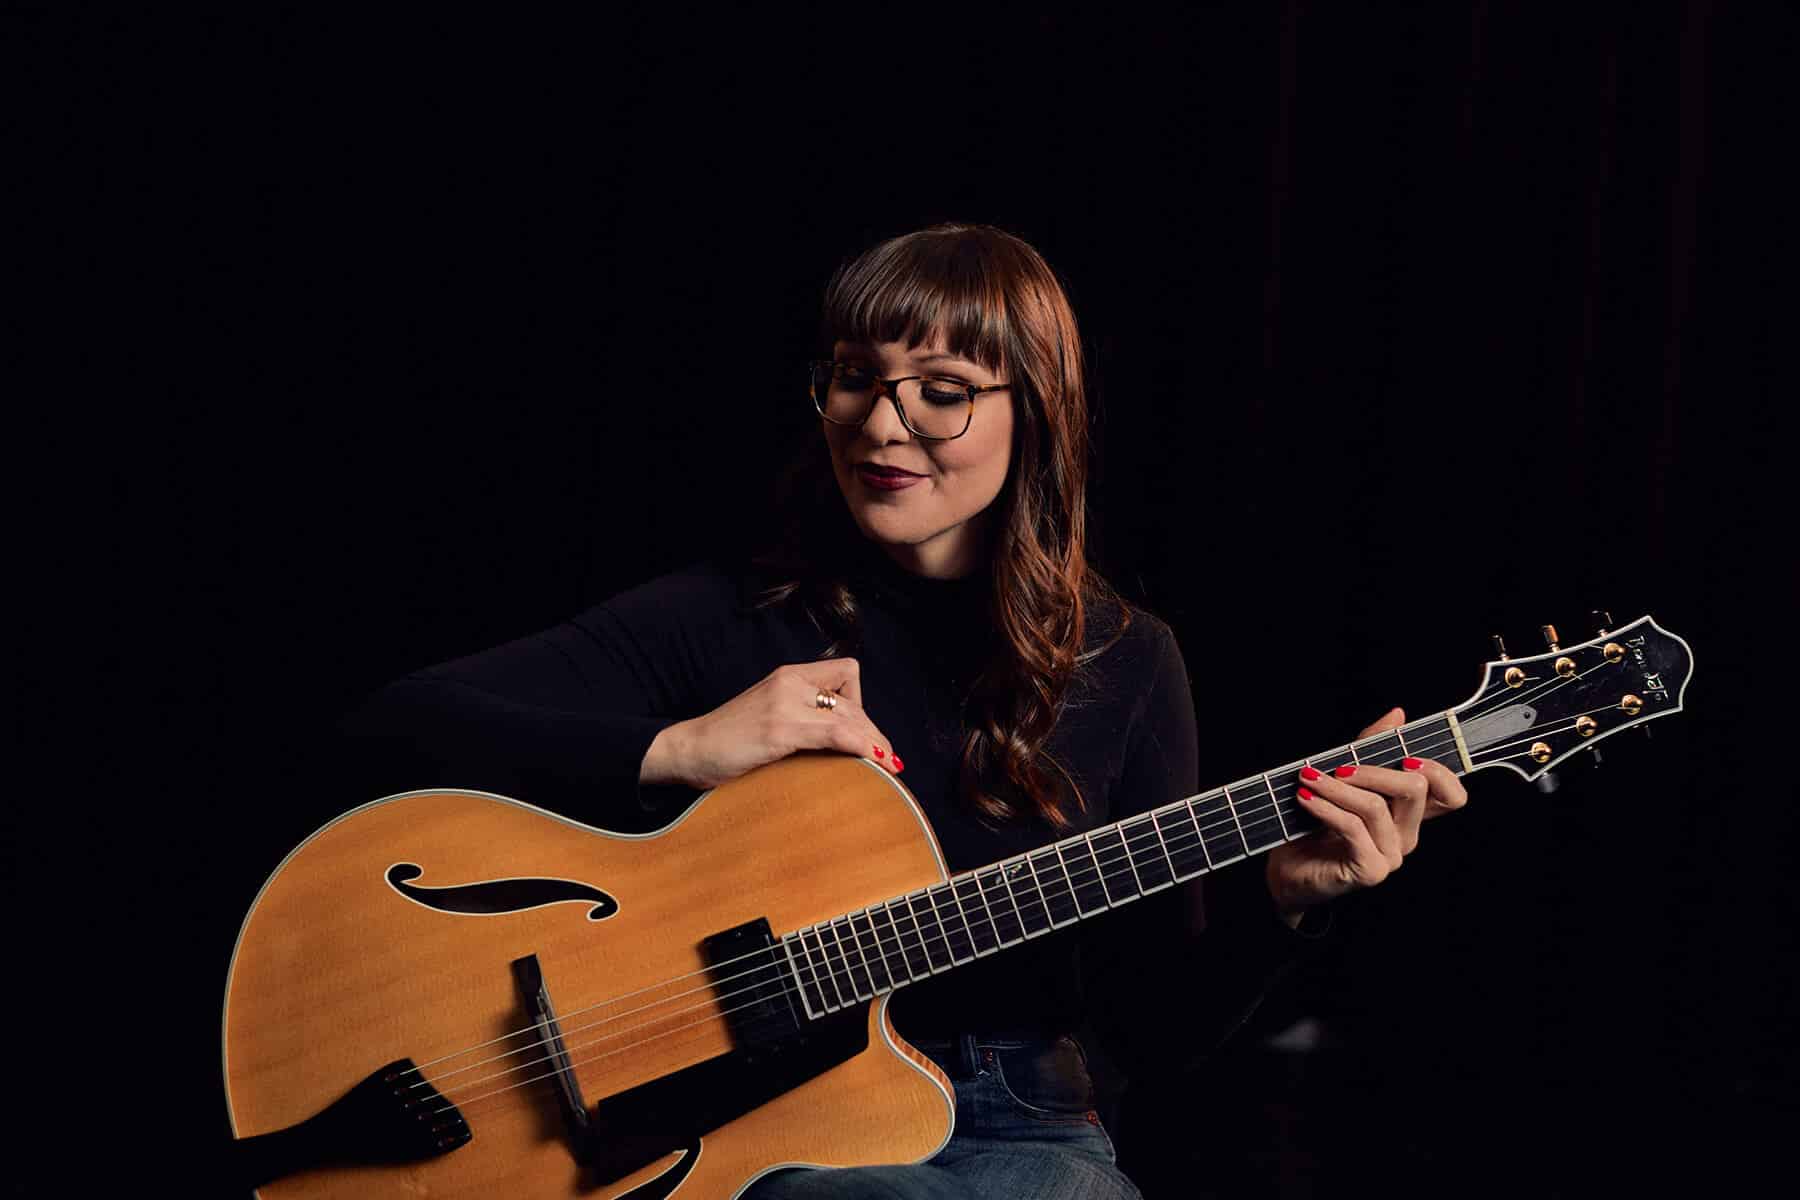 Jocelyn Gould against a black background holding her Benedetto guitar.